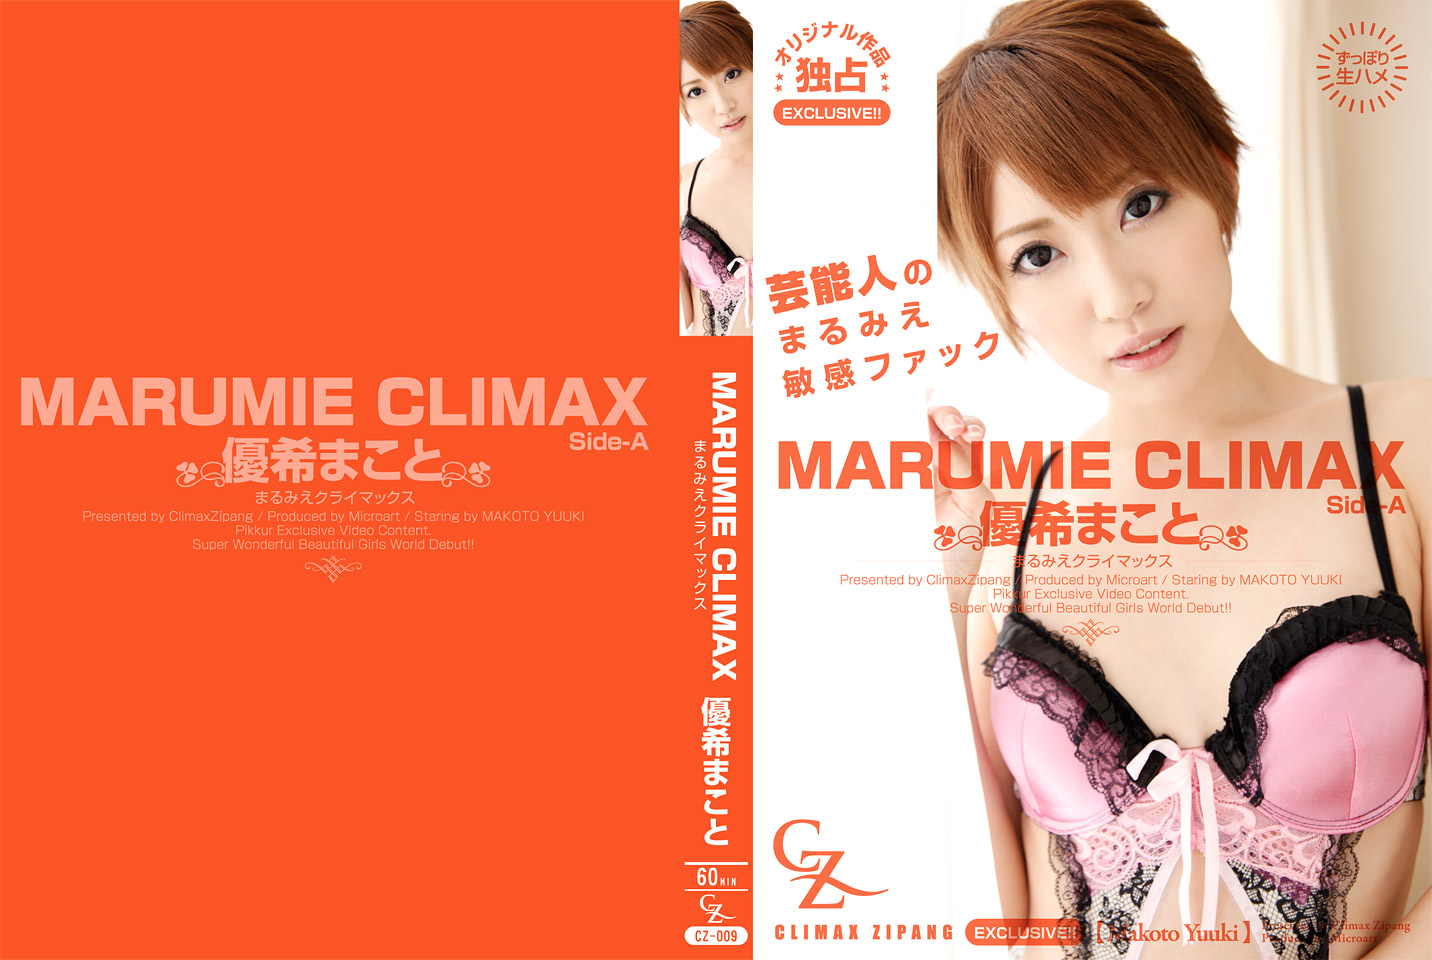 MARUMIE CLIMAX 優希まこと Side-A